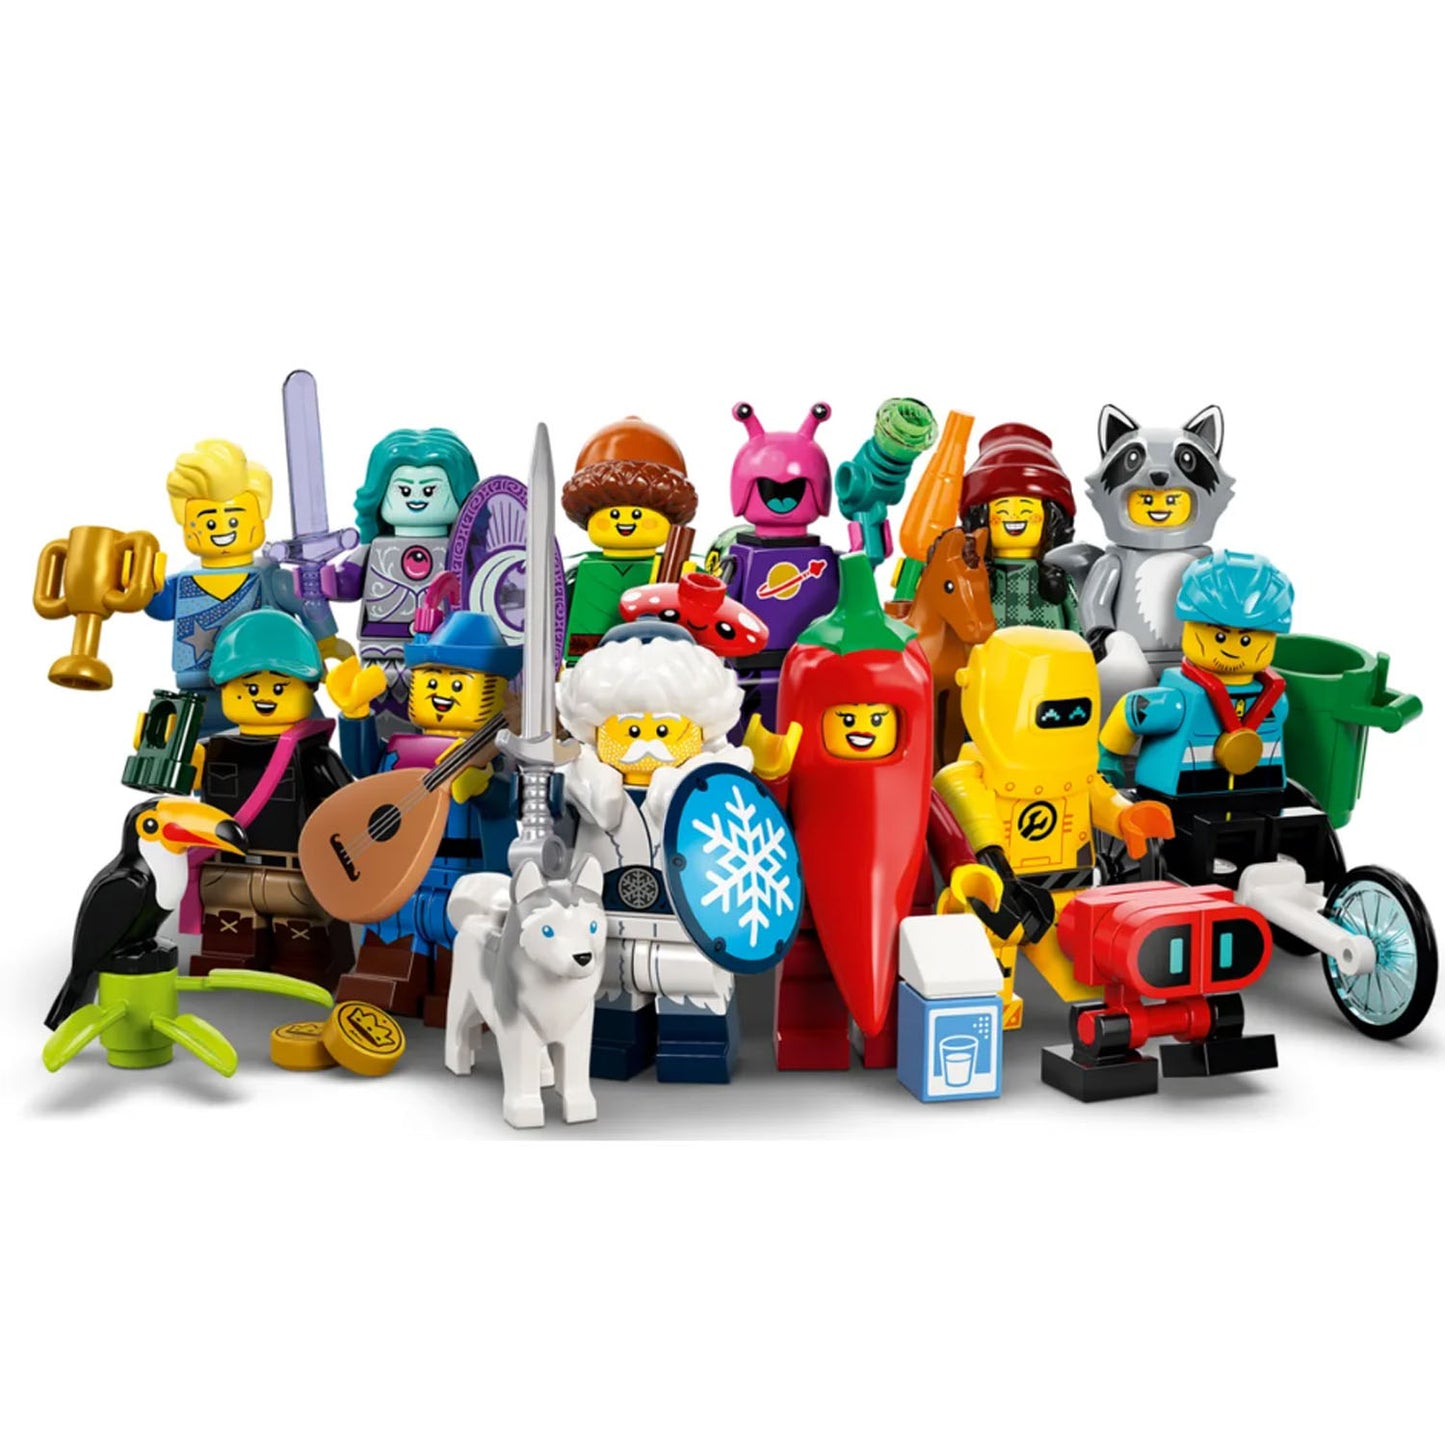 Lego Minifigura Serie 22- Crazygames